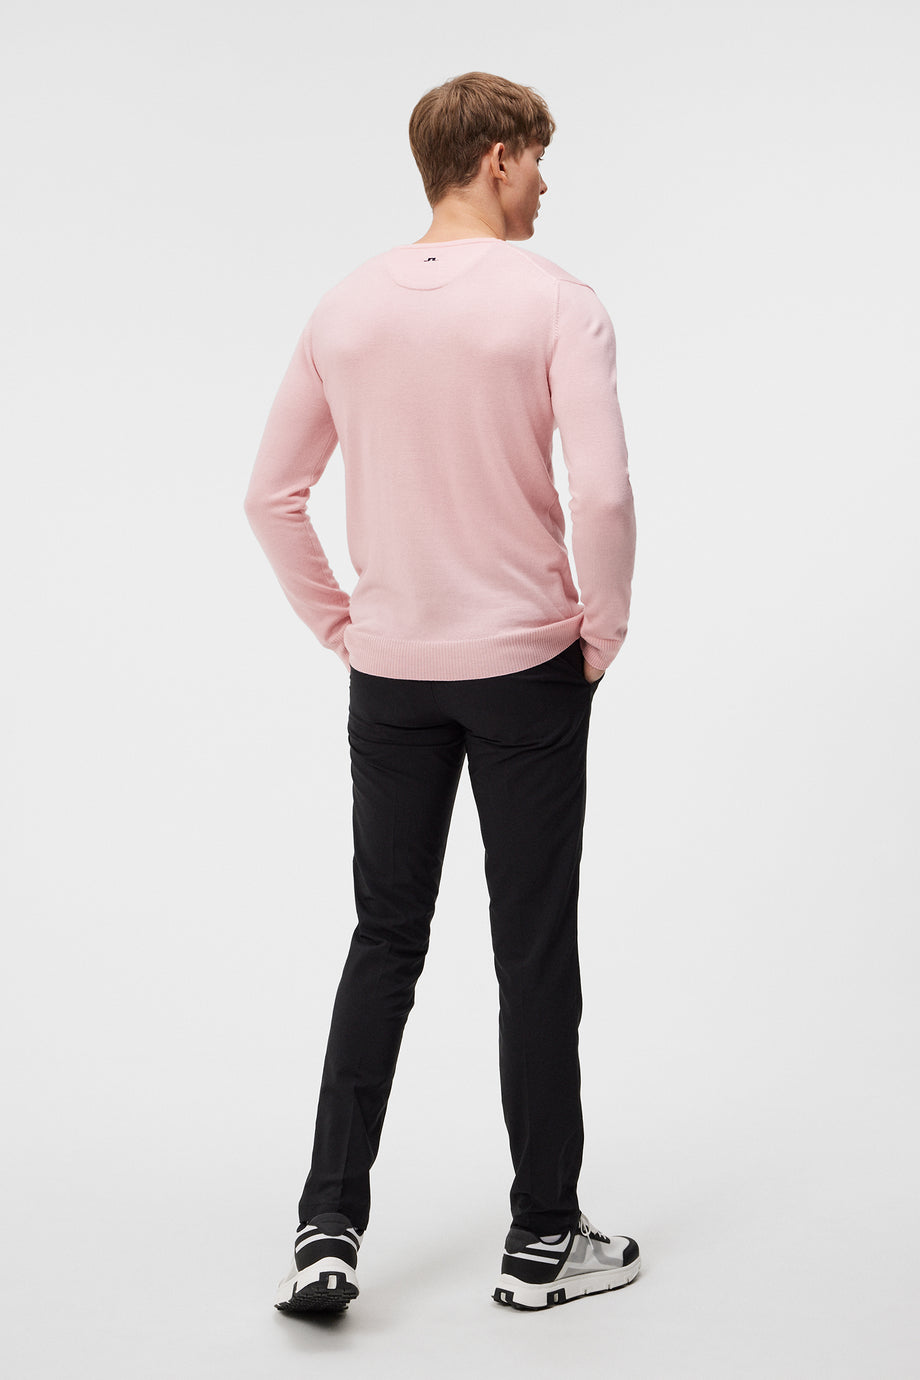 Lymann Knitted Sweater / Powder Pink